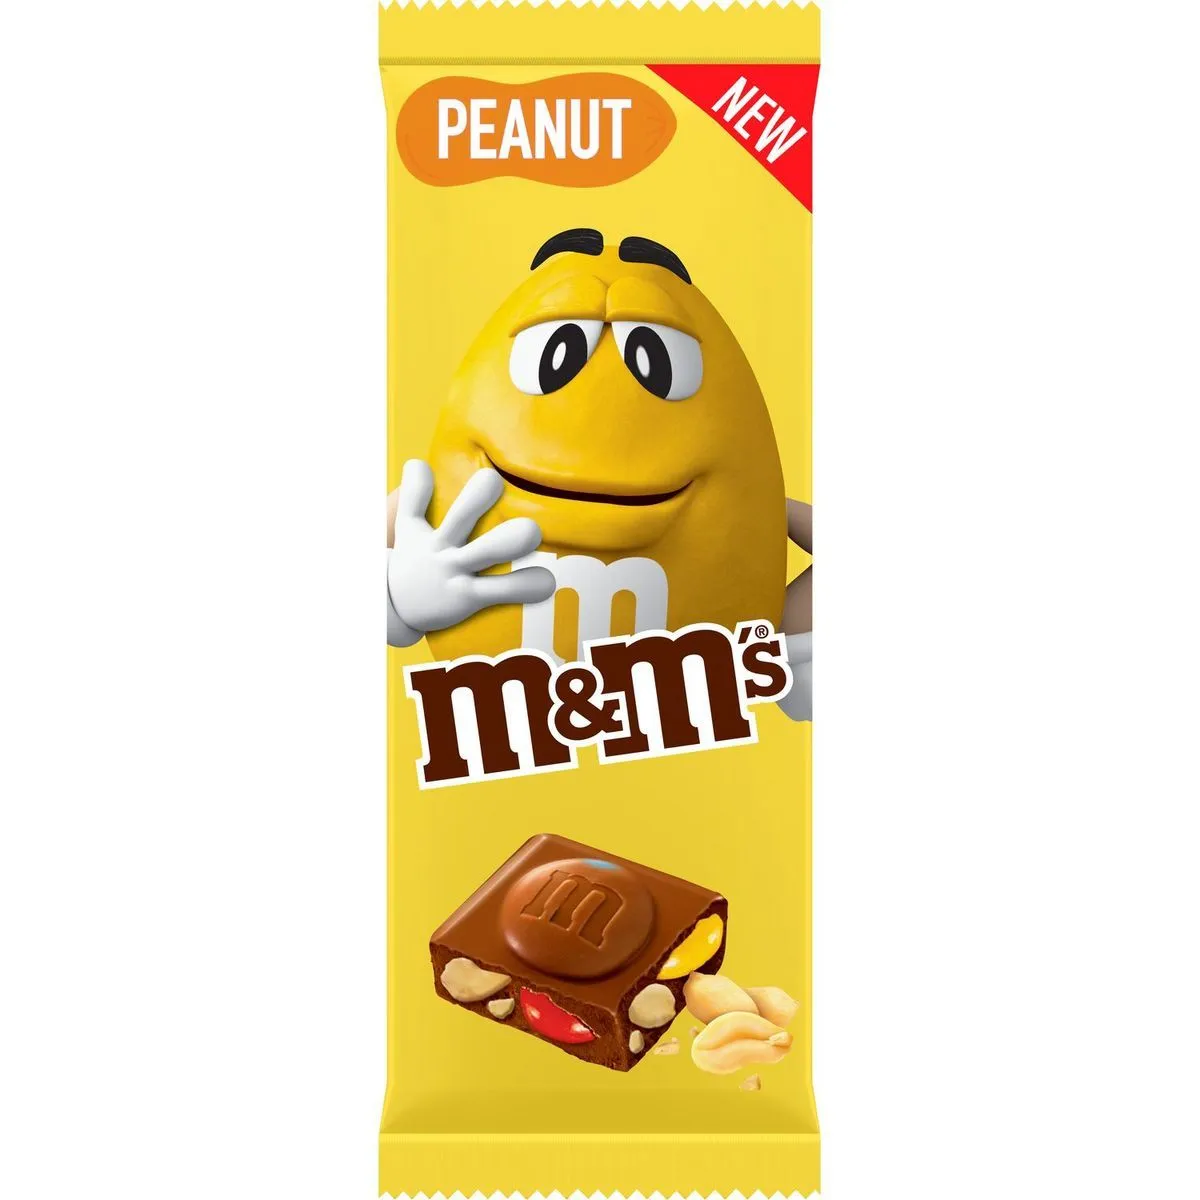 tablette de chocolat m&m's peanut